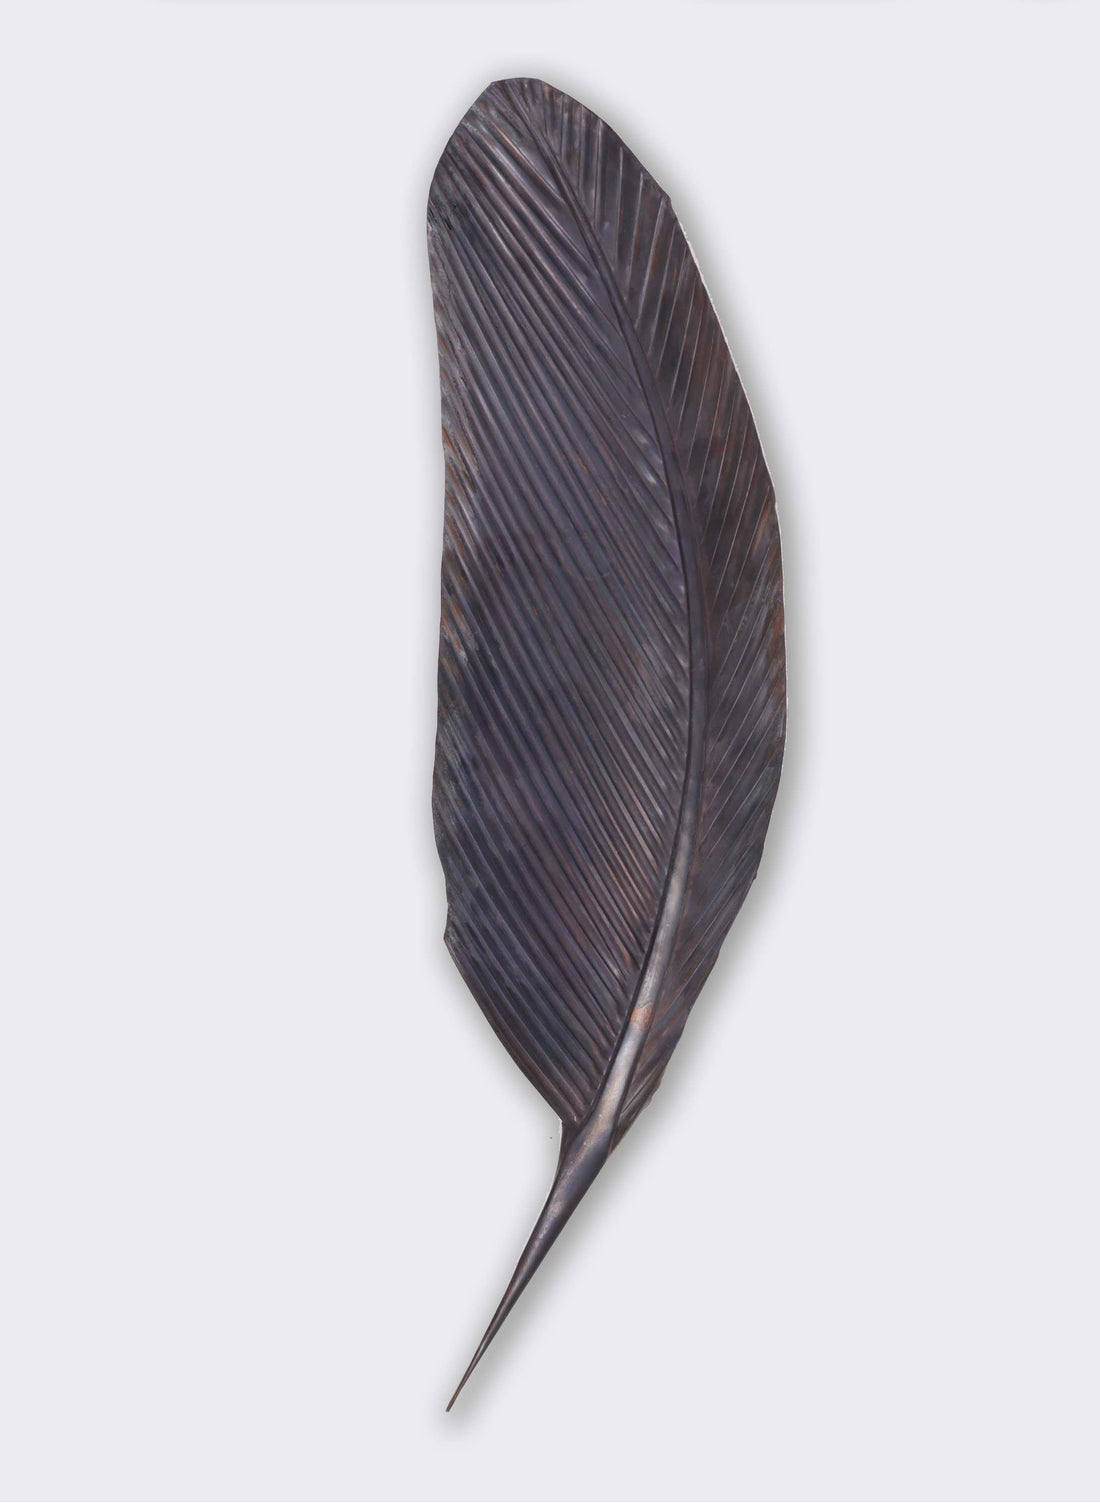 Tui Feather 603mm - Black Patina Copper